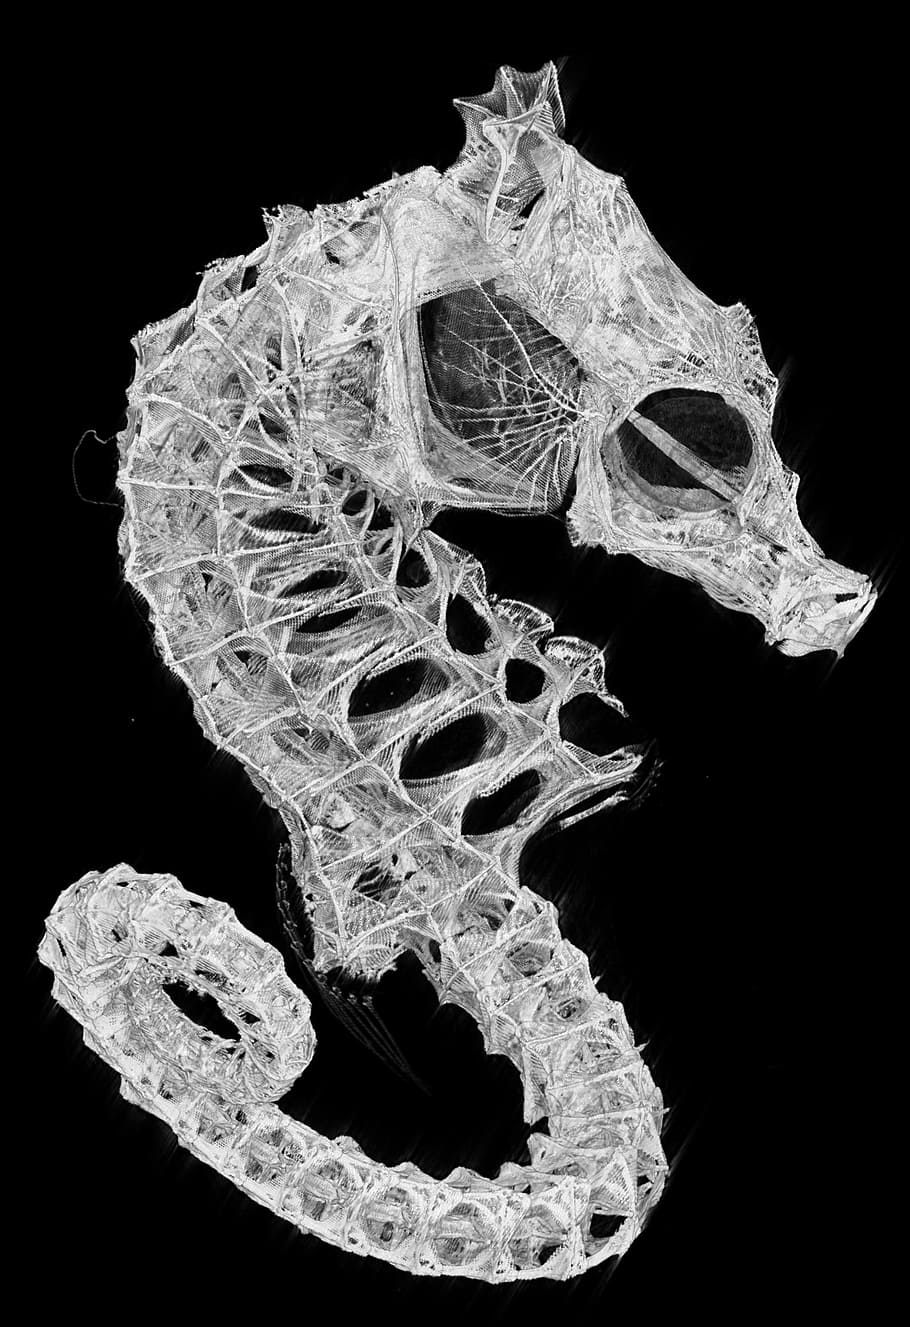 white, seahorse skeleton, black, background photo, seahorse, skeleton, biology, fish, black background, studio shot